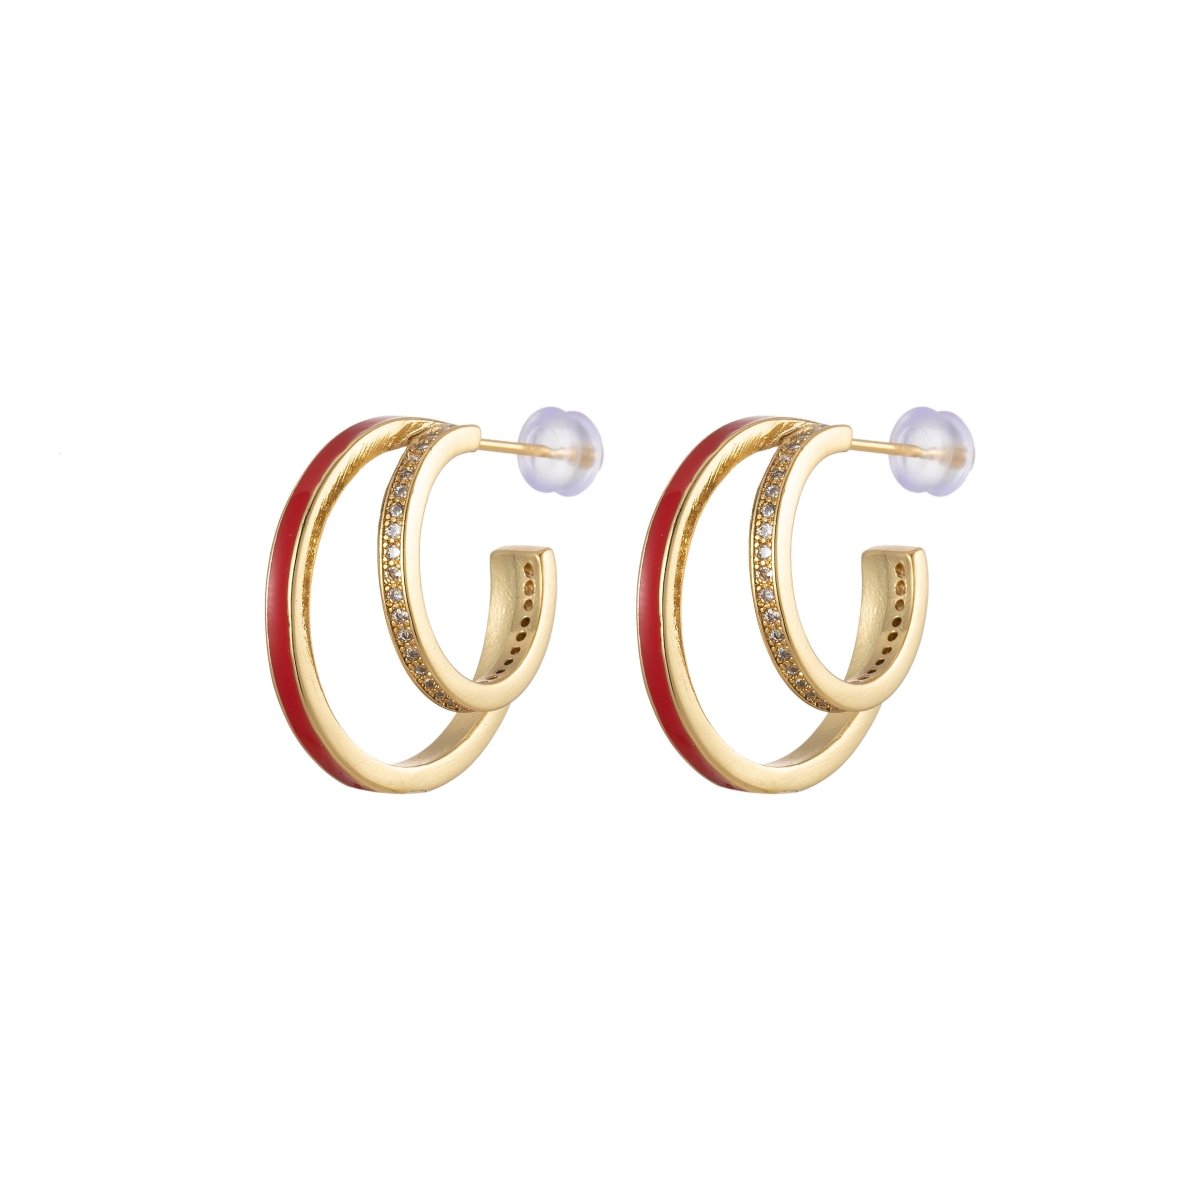 Enamel Hoops Gold, 14K Gold Filled Hoops, Large Gold Hoop Earrings, Small Hoops Black Pink Red White Earrings, Chunky Light Hoops P-206~P-209 - DLUXCA